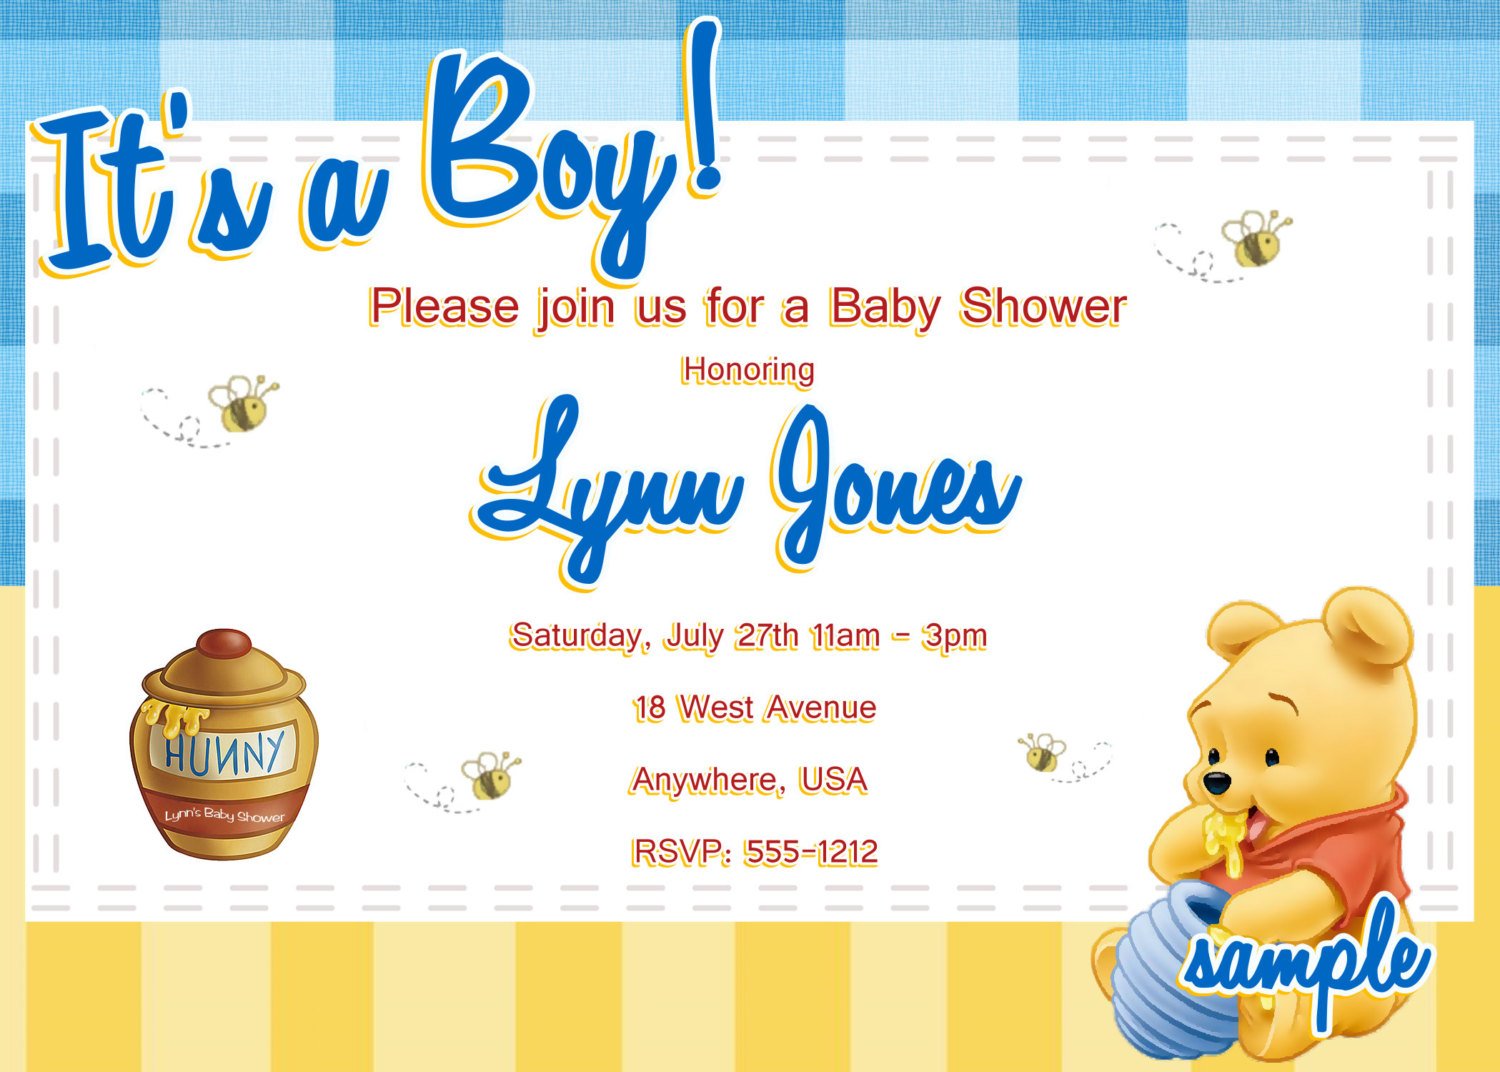 Honey Pot Classic Pooh Baby Shower Invitations